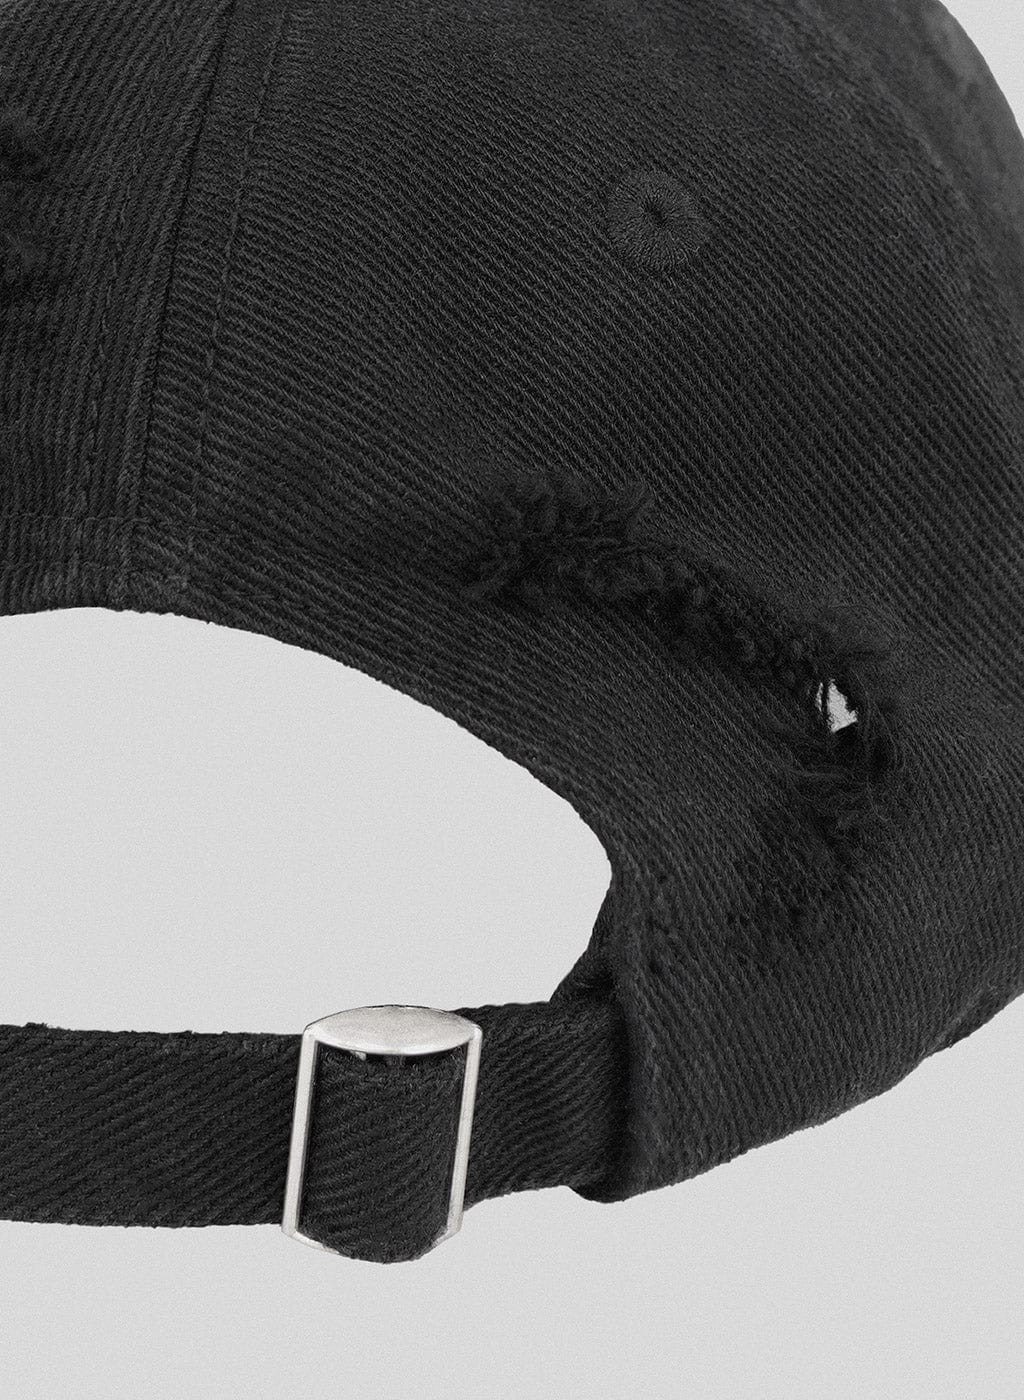 UNDERWATER Ripped Logo Hat, premium urban and streetwear designers apparel on PROJECTISR.com, UNDERWATER